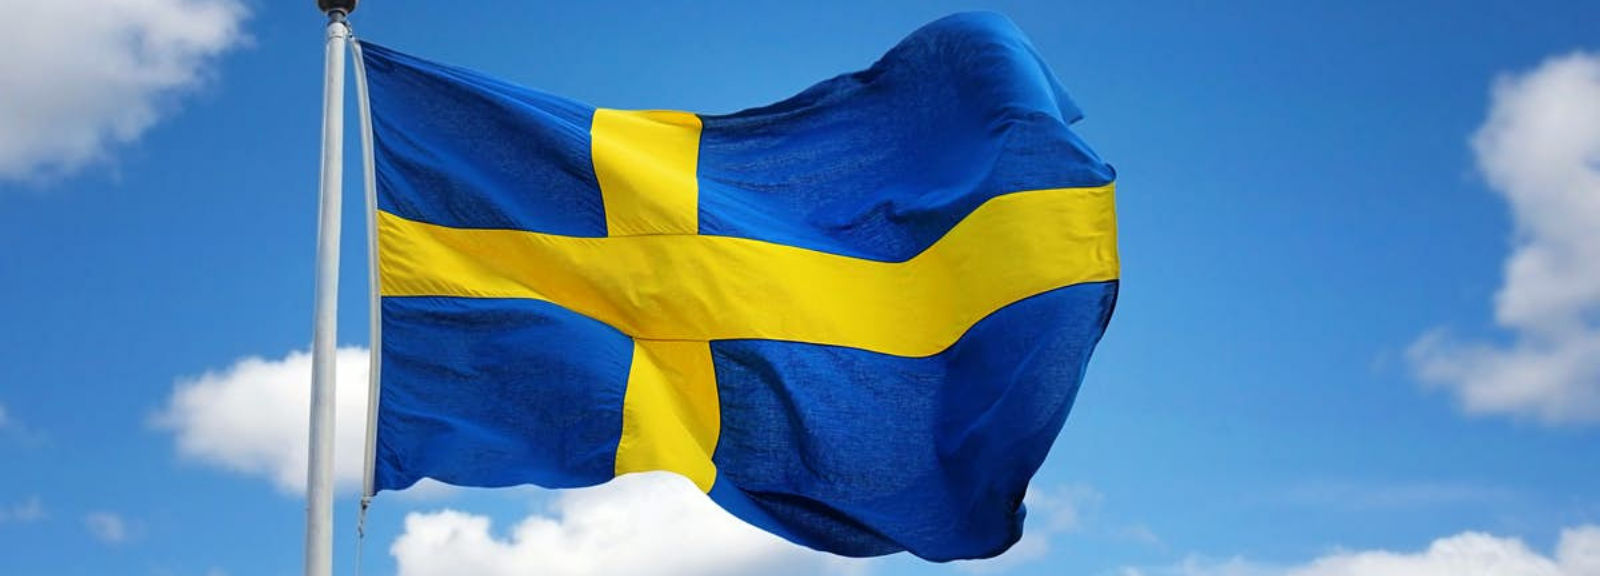 Swedish flag on a pole.